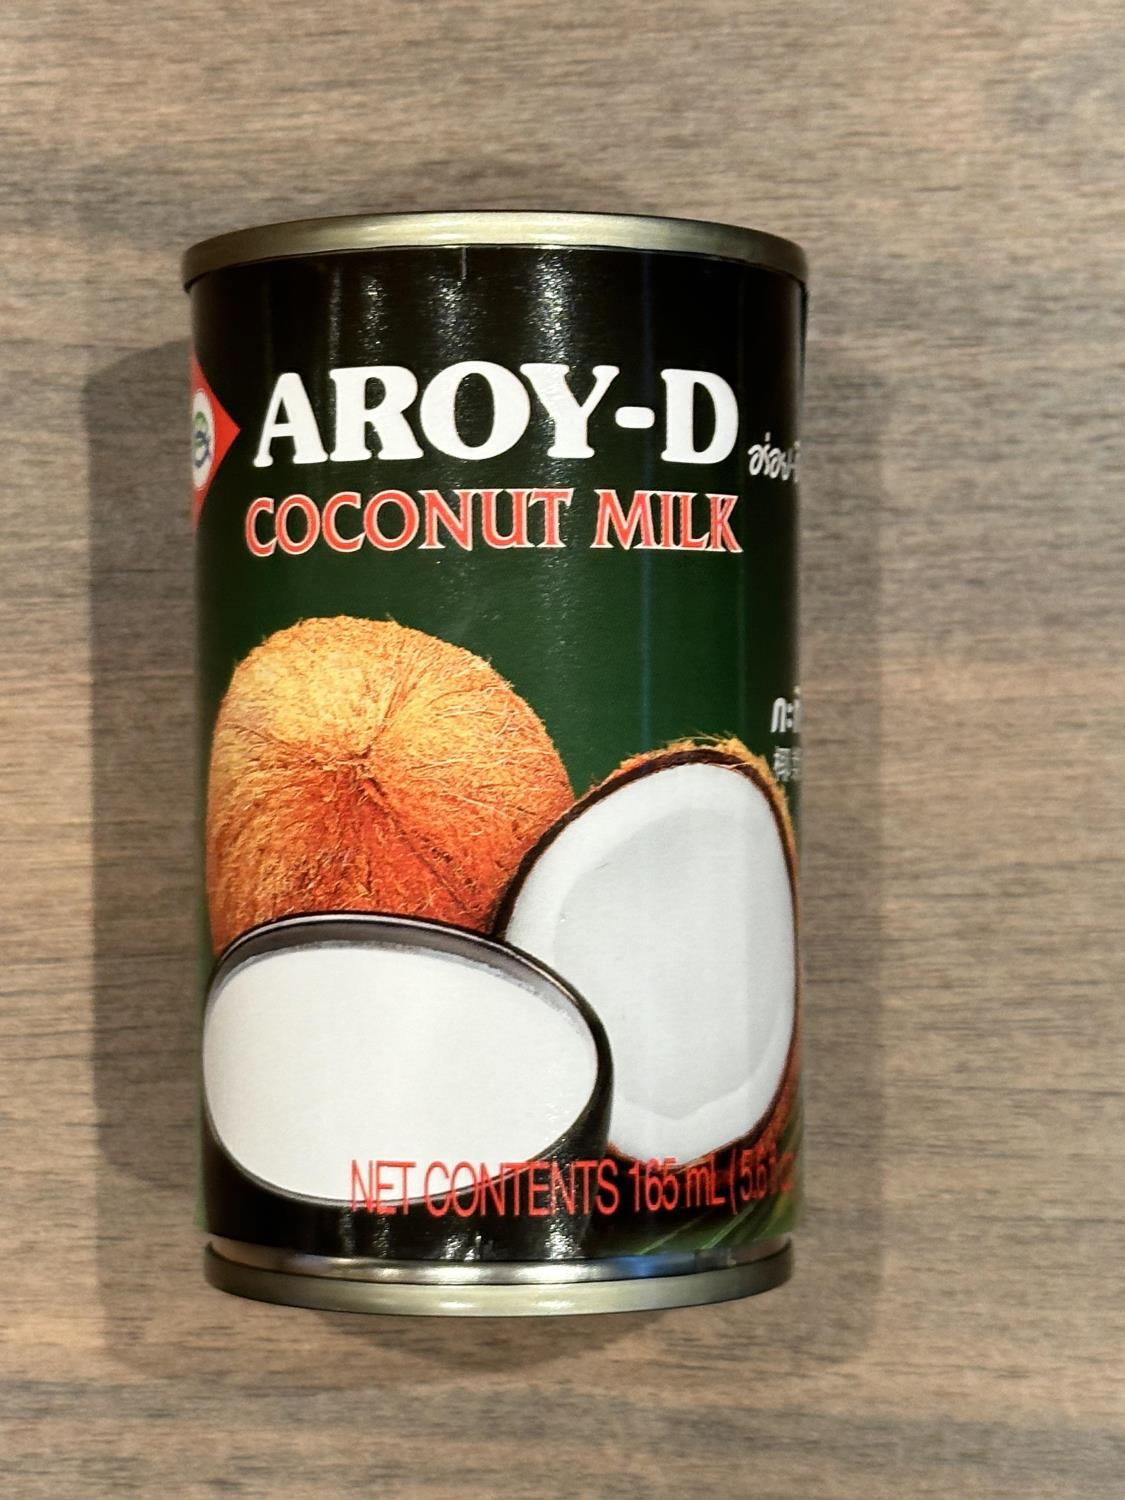 Aroy - D coconut milk